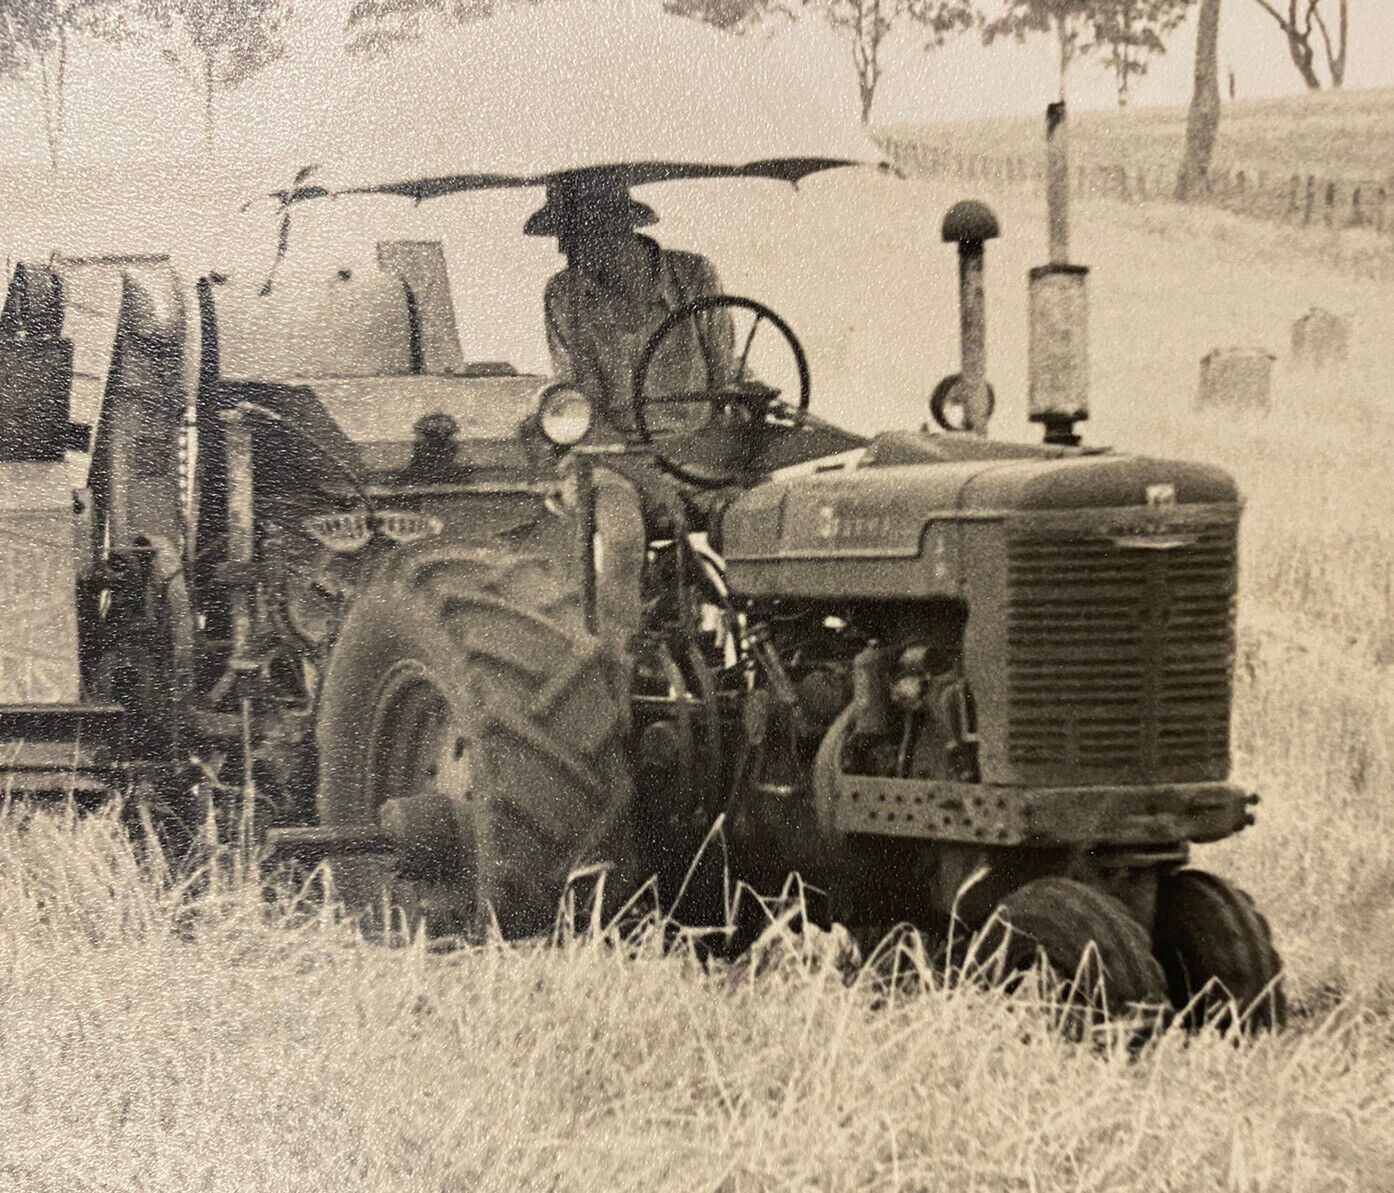 ORIGINAL 1950s FARMALL TRACTORS WORKING PADDOCK HISTORIC QLD PHOTOS EJ BARR